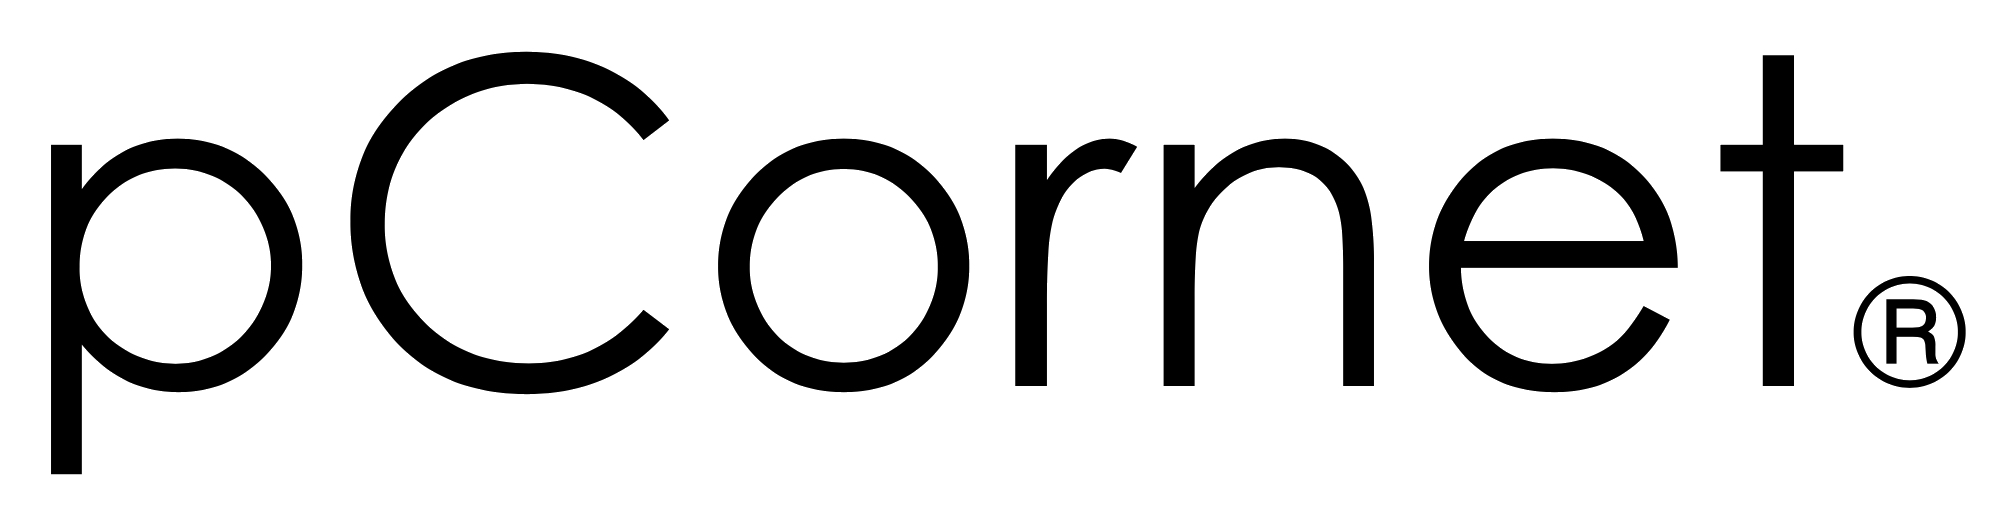 pCornet logo